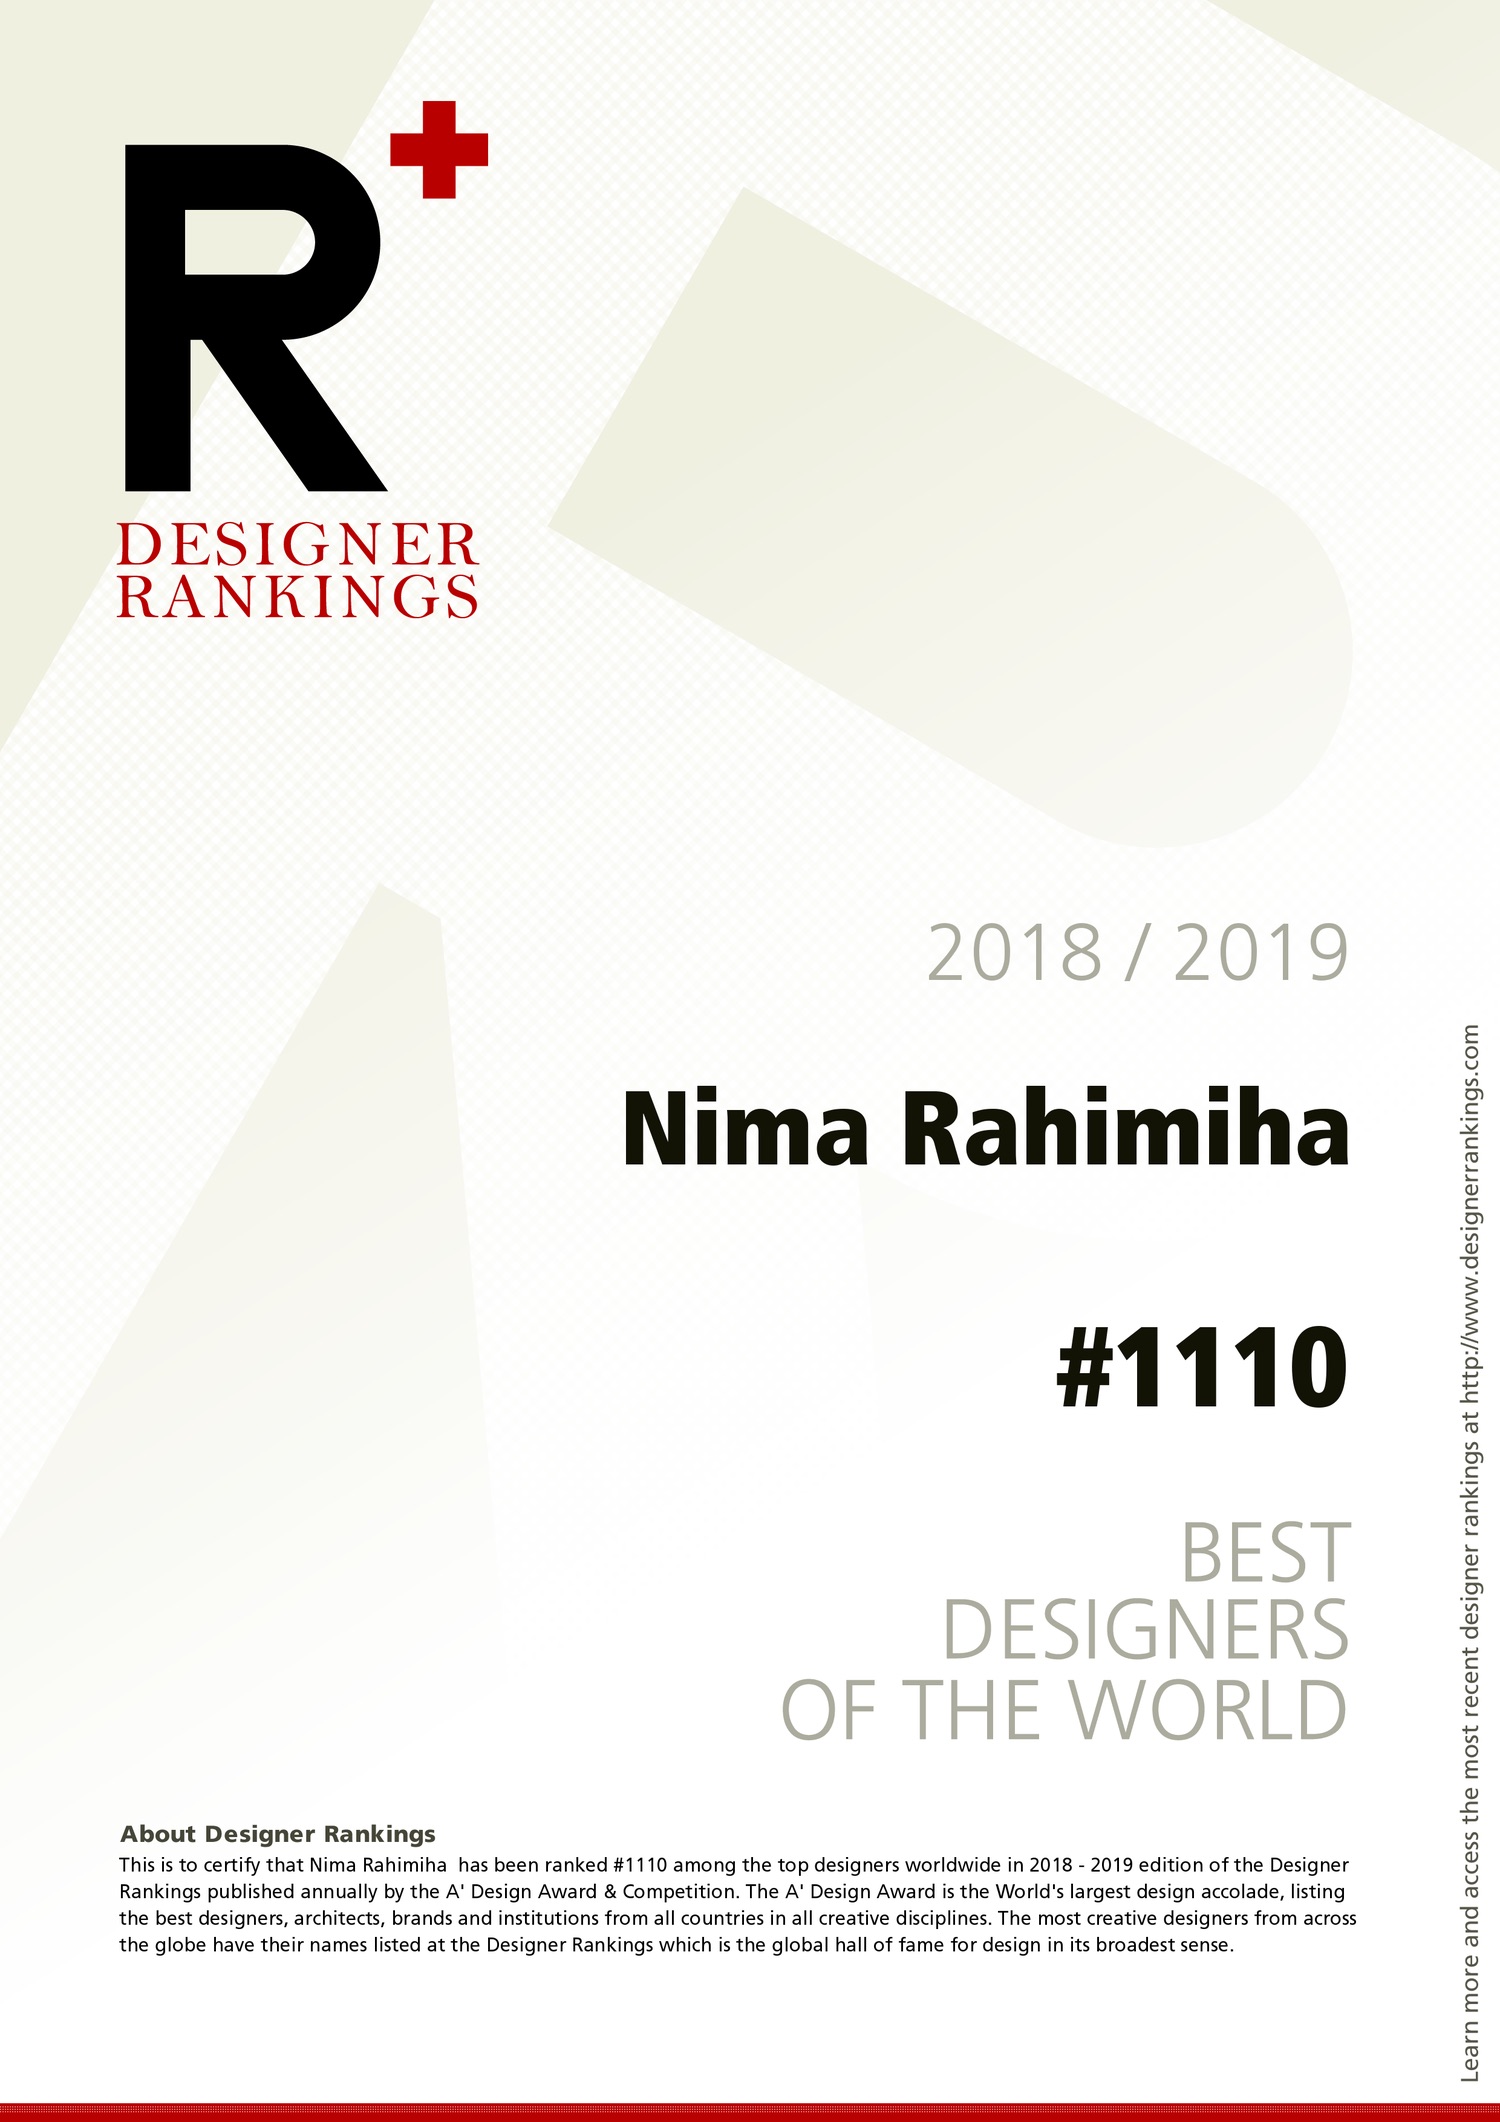 Nima Rahimiha - Designer Ranking